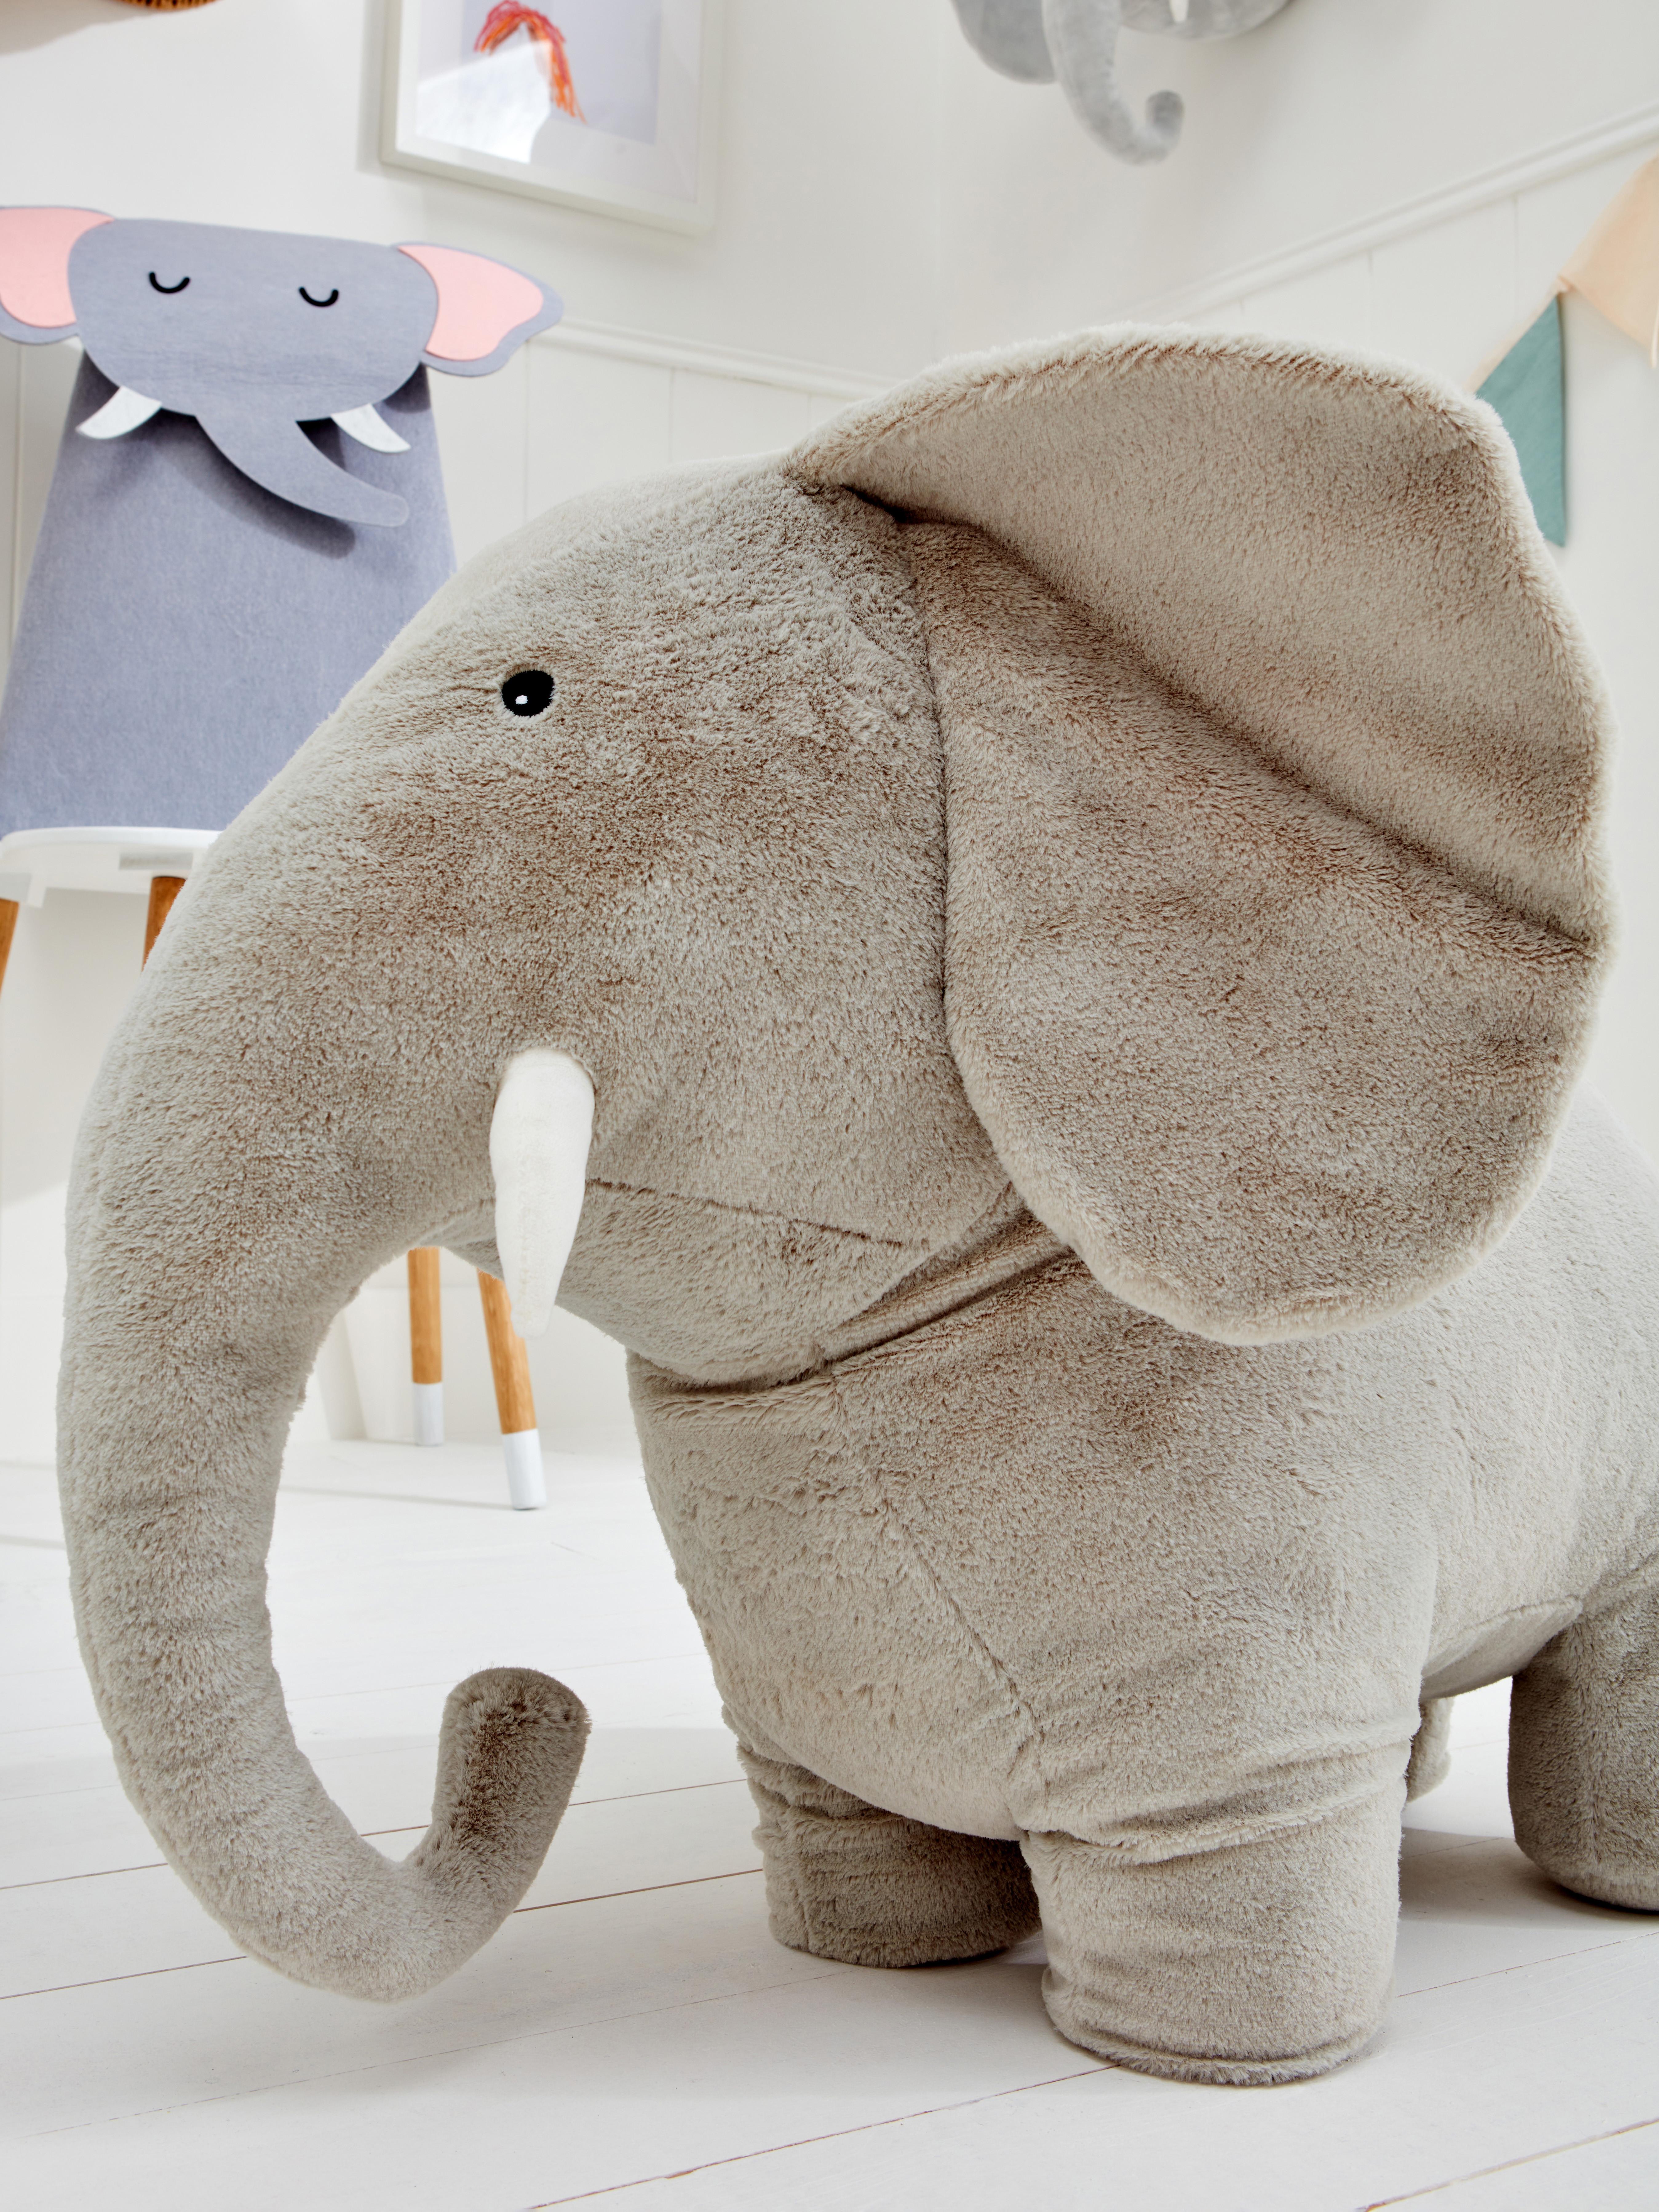 Standing Elephant Toy